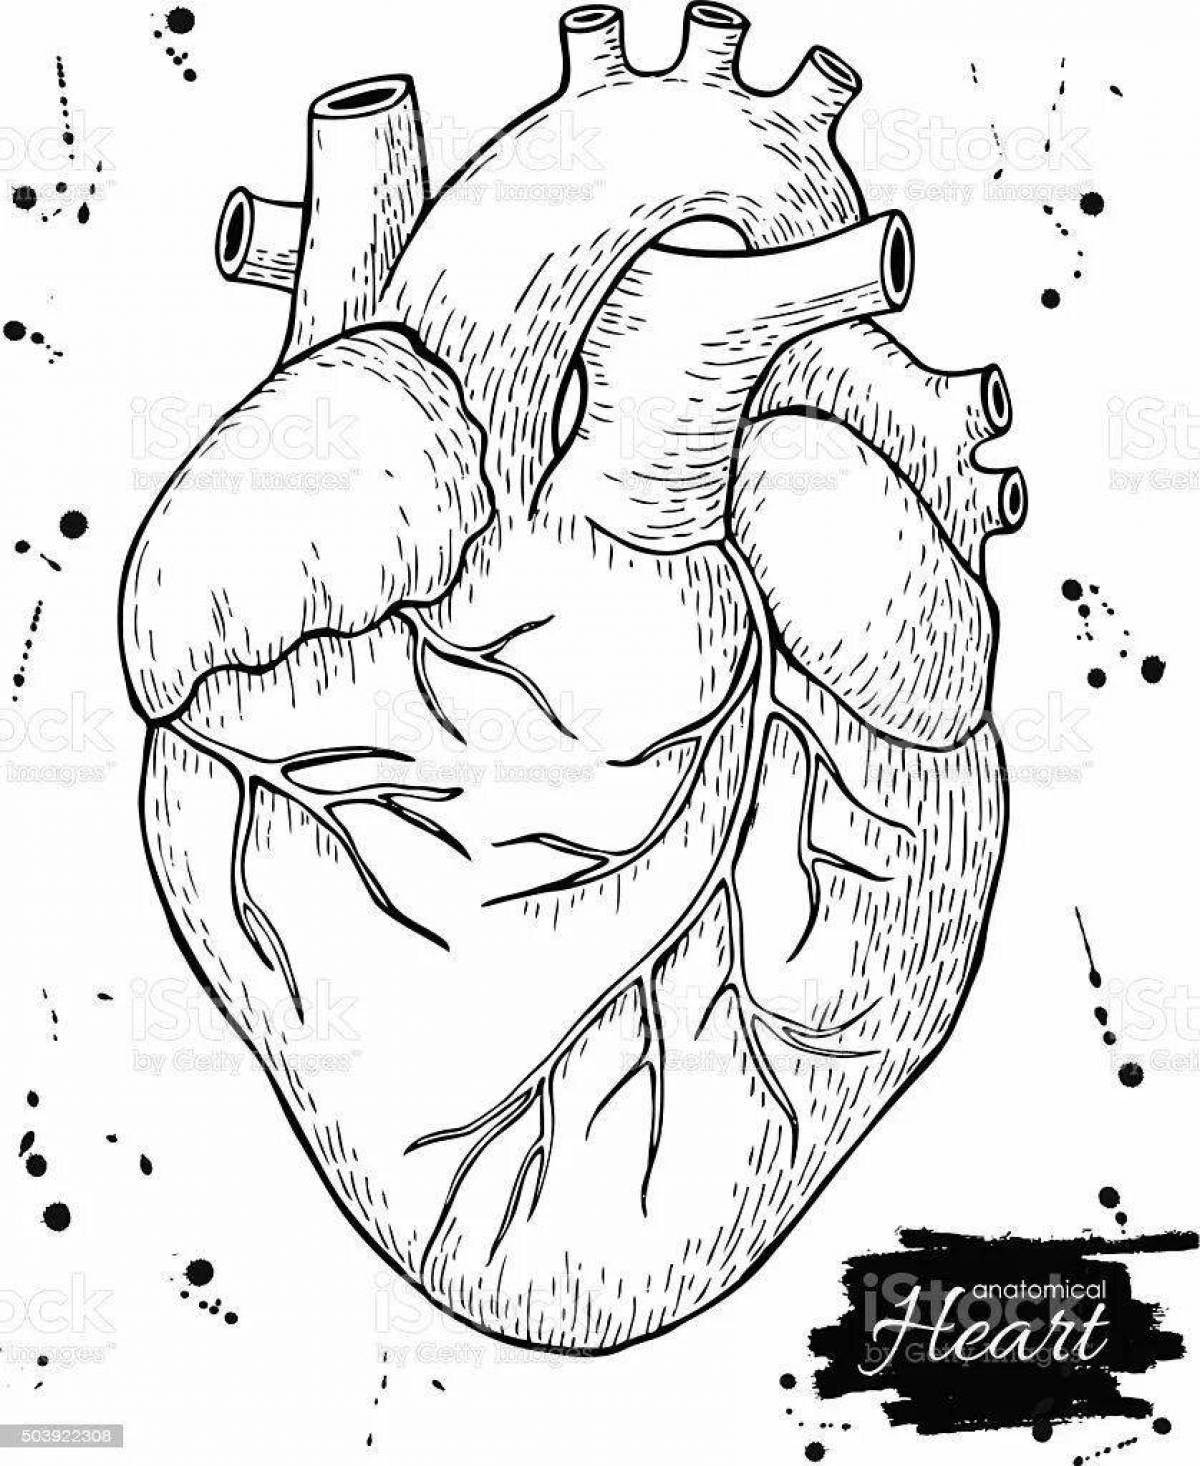 Great heart organ coloring book